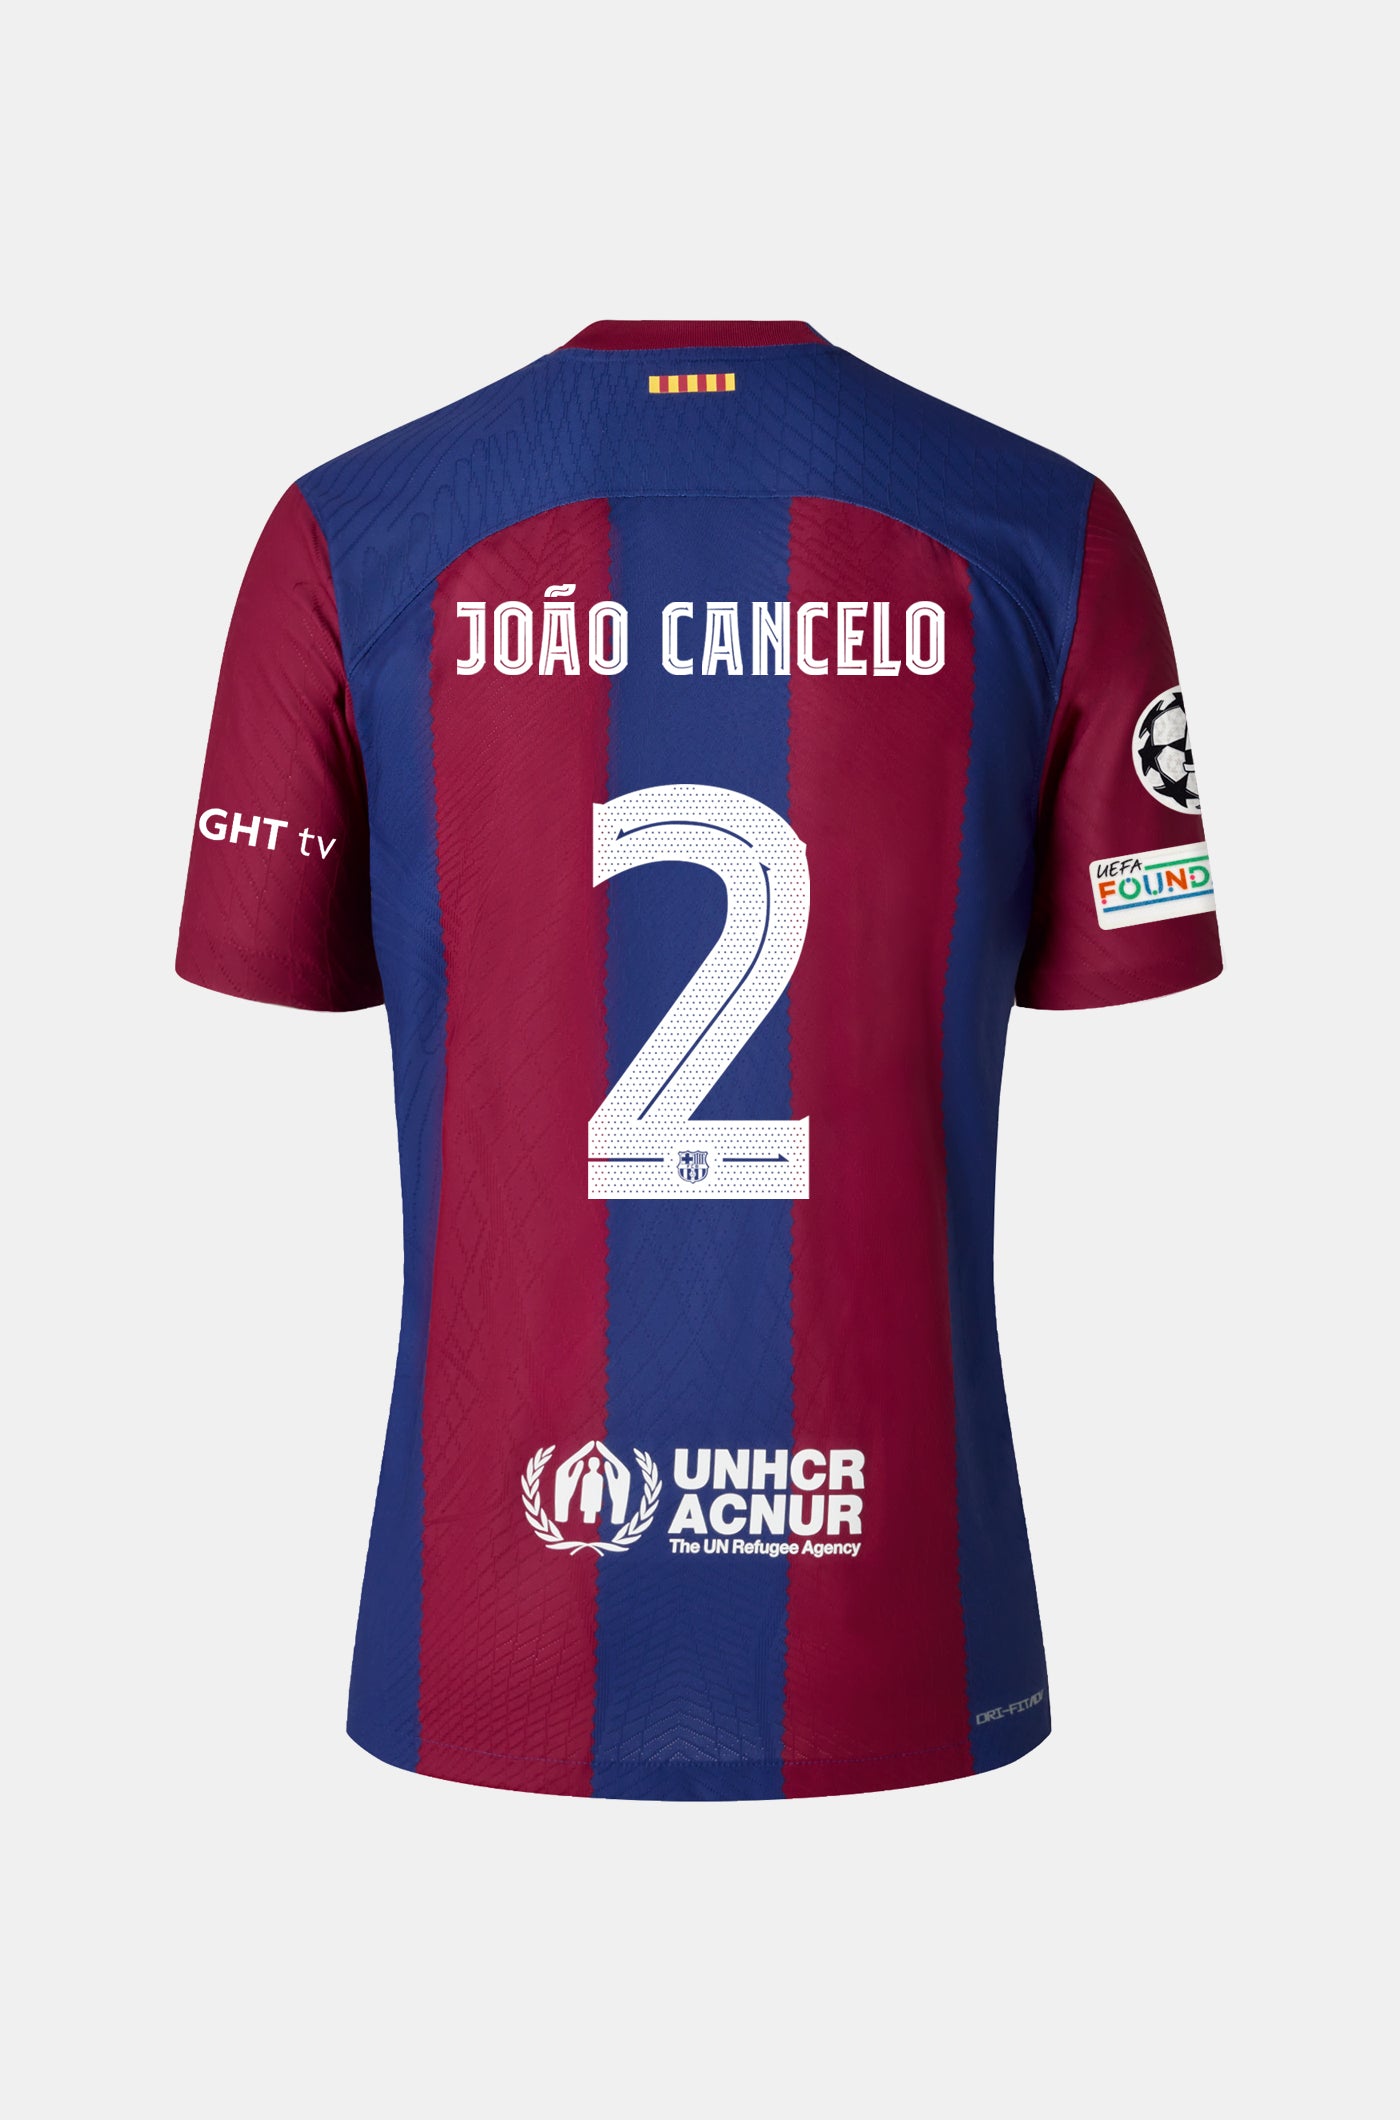 UCL FC Barcelona home shirt 23/24 Player's Edition  - JOÃO CANCELO